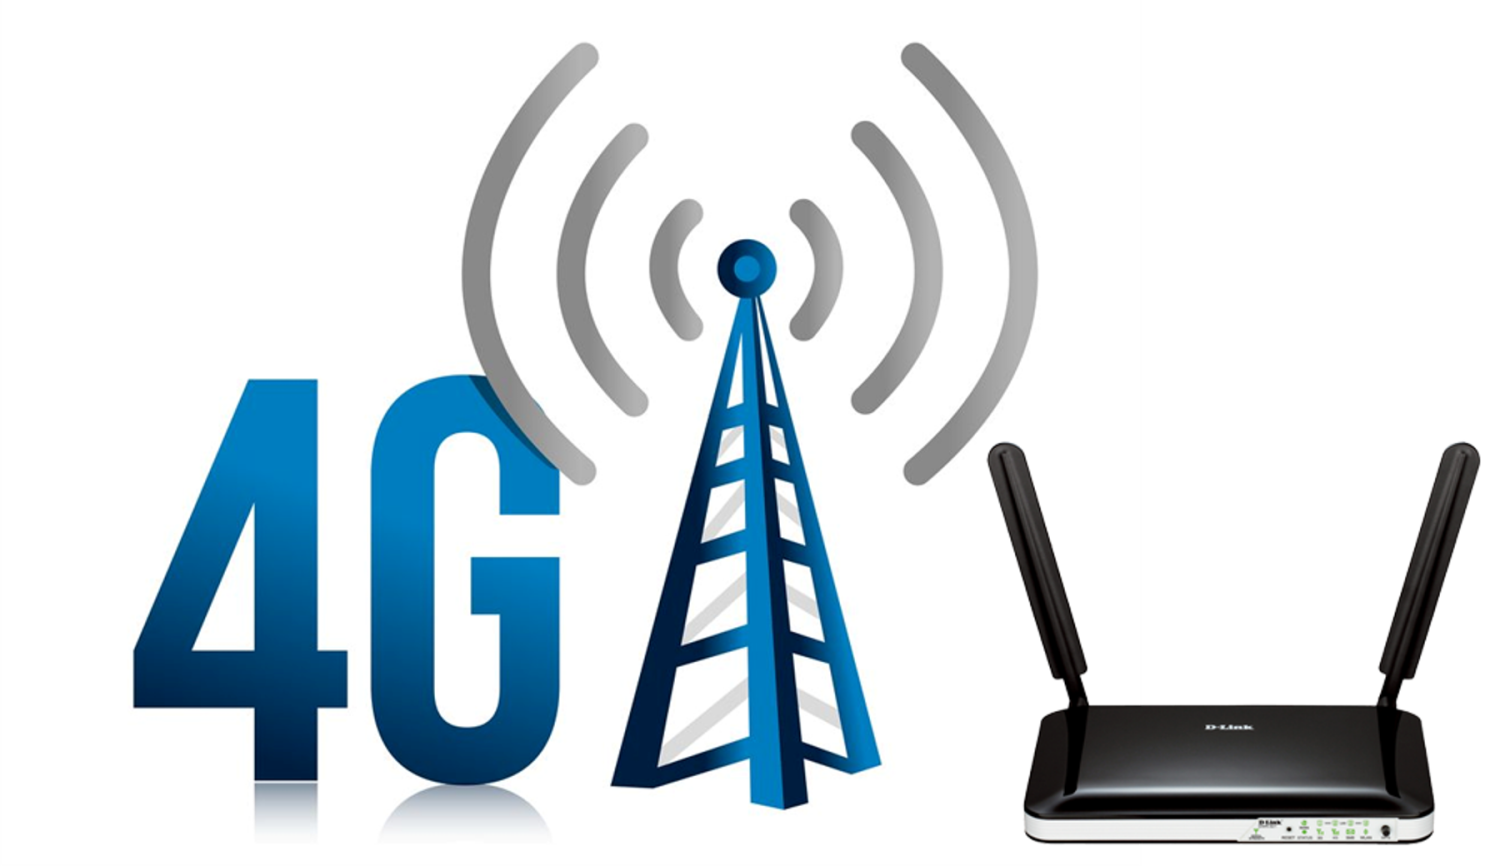 3g b 4g. Сети сотовой связи 4g. 4g LTE. 3g 4g LTE device. Мобильная сеть 4g (WIMAX va LTE).